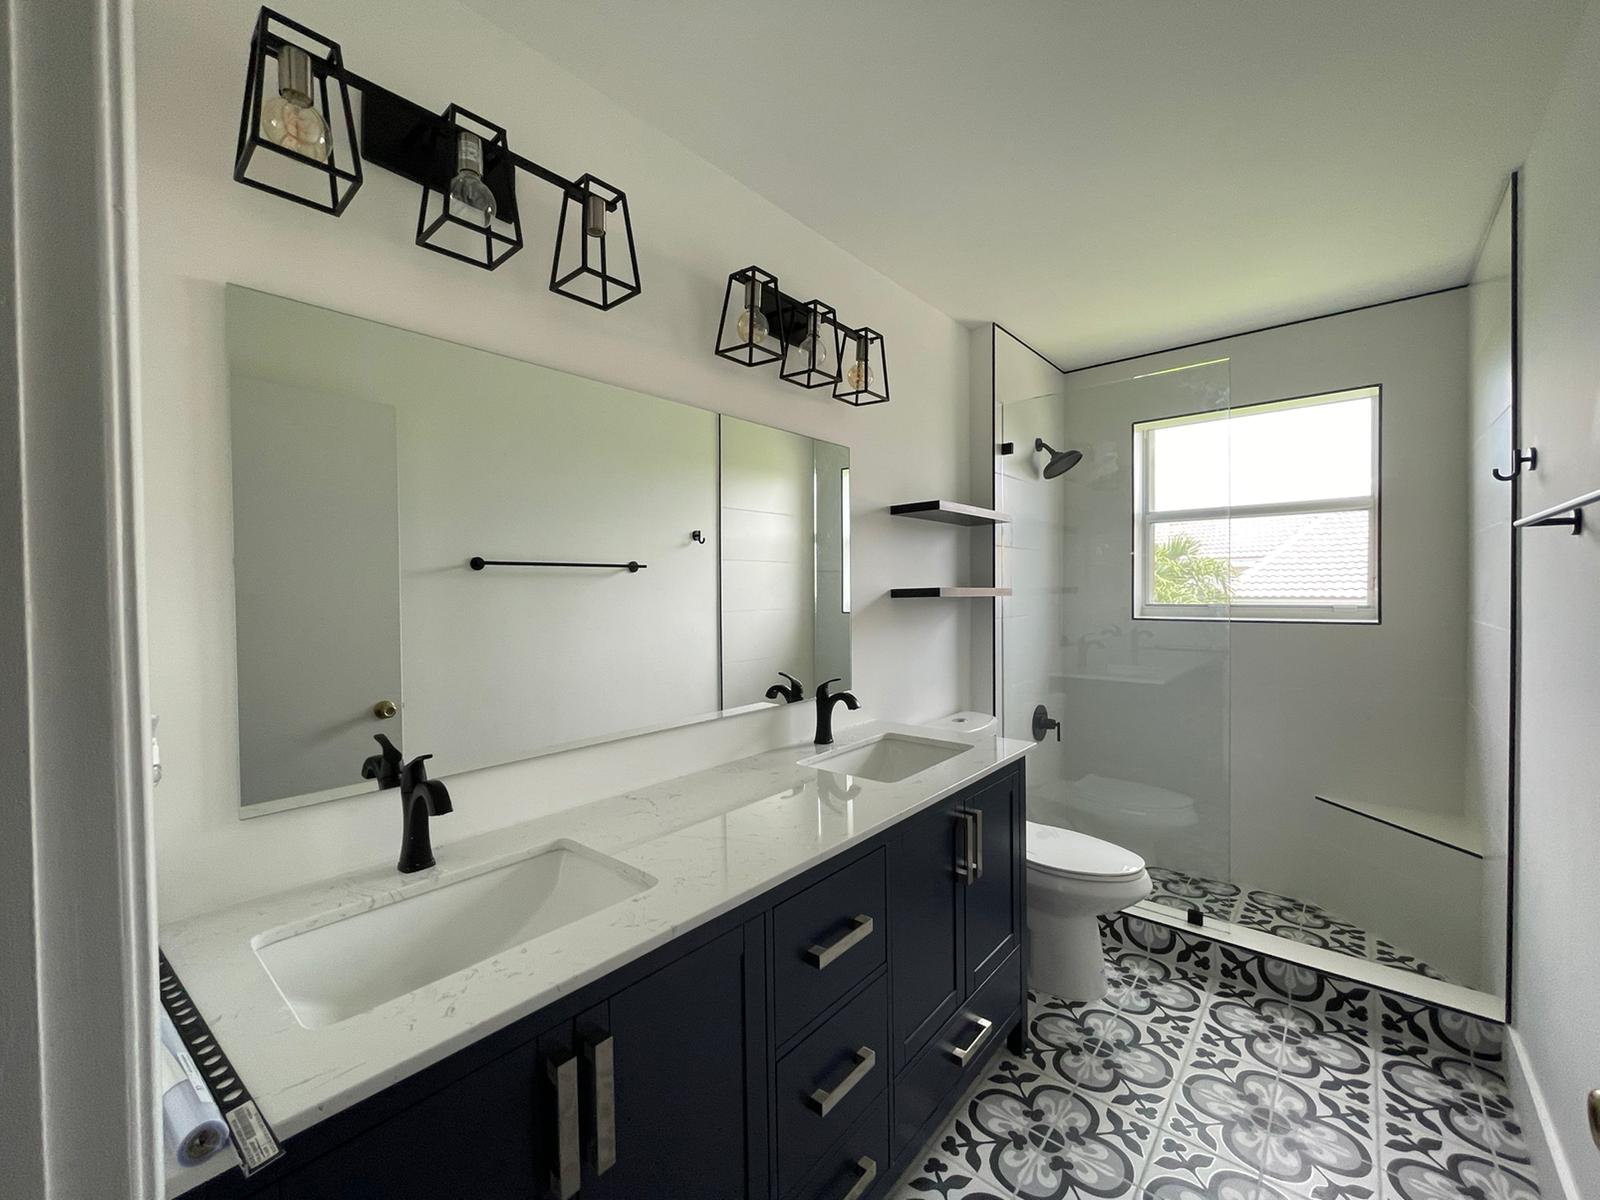 Bathroom design with patterned floor - La Toscana Imports